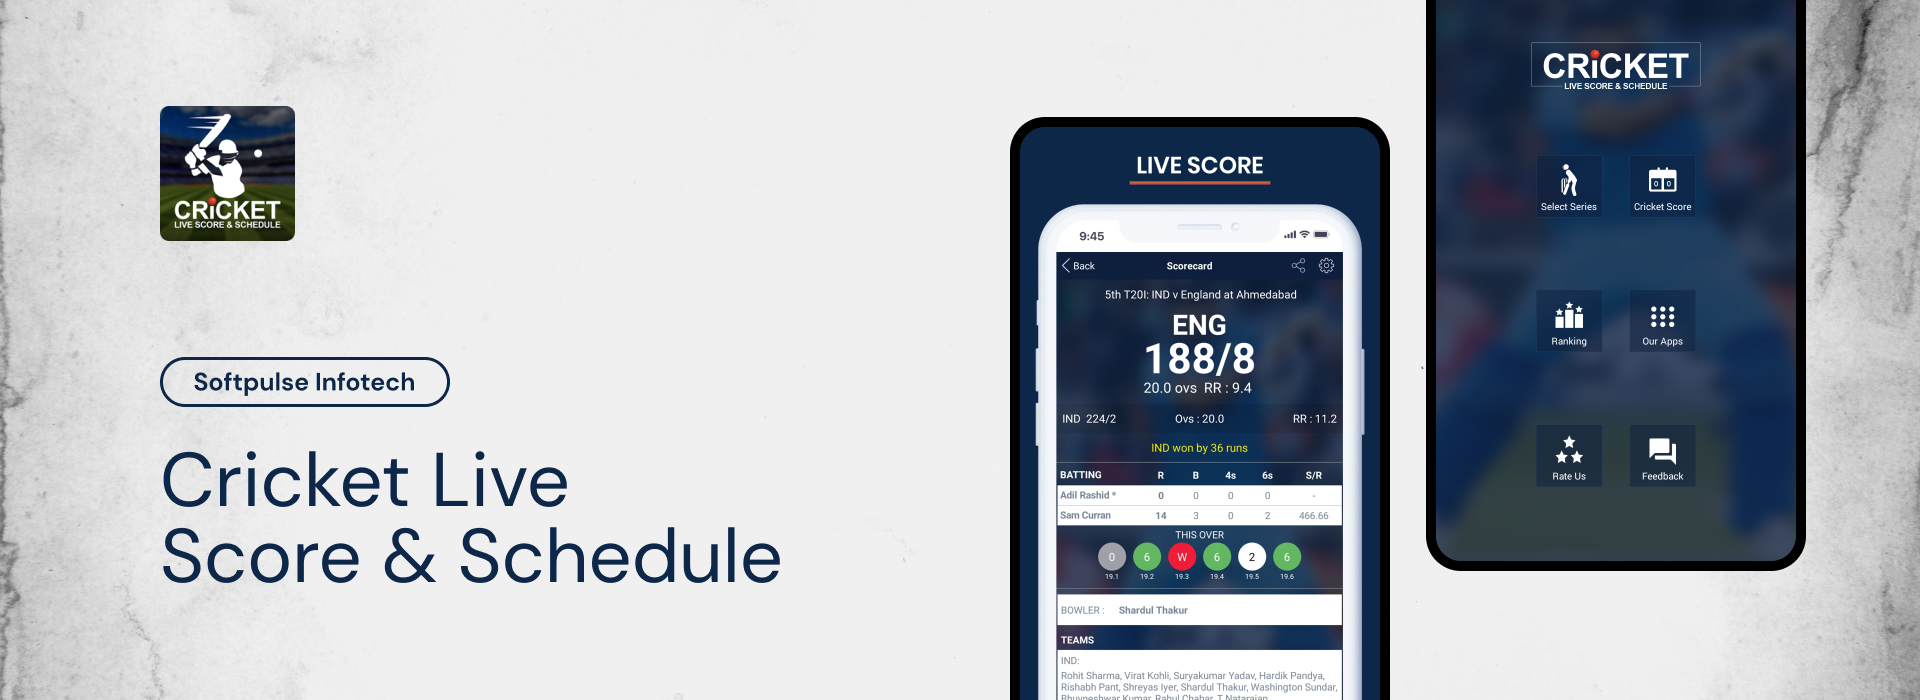 Cricket Live Score & Schedule main banner